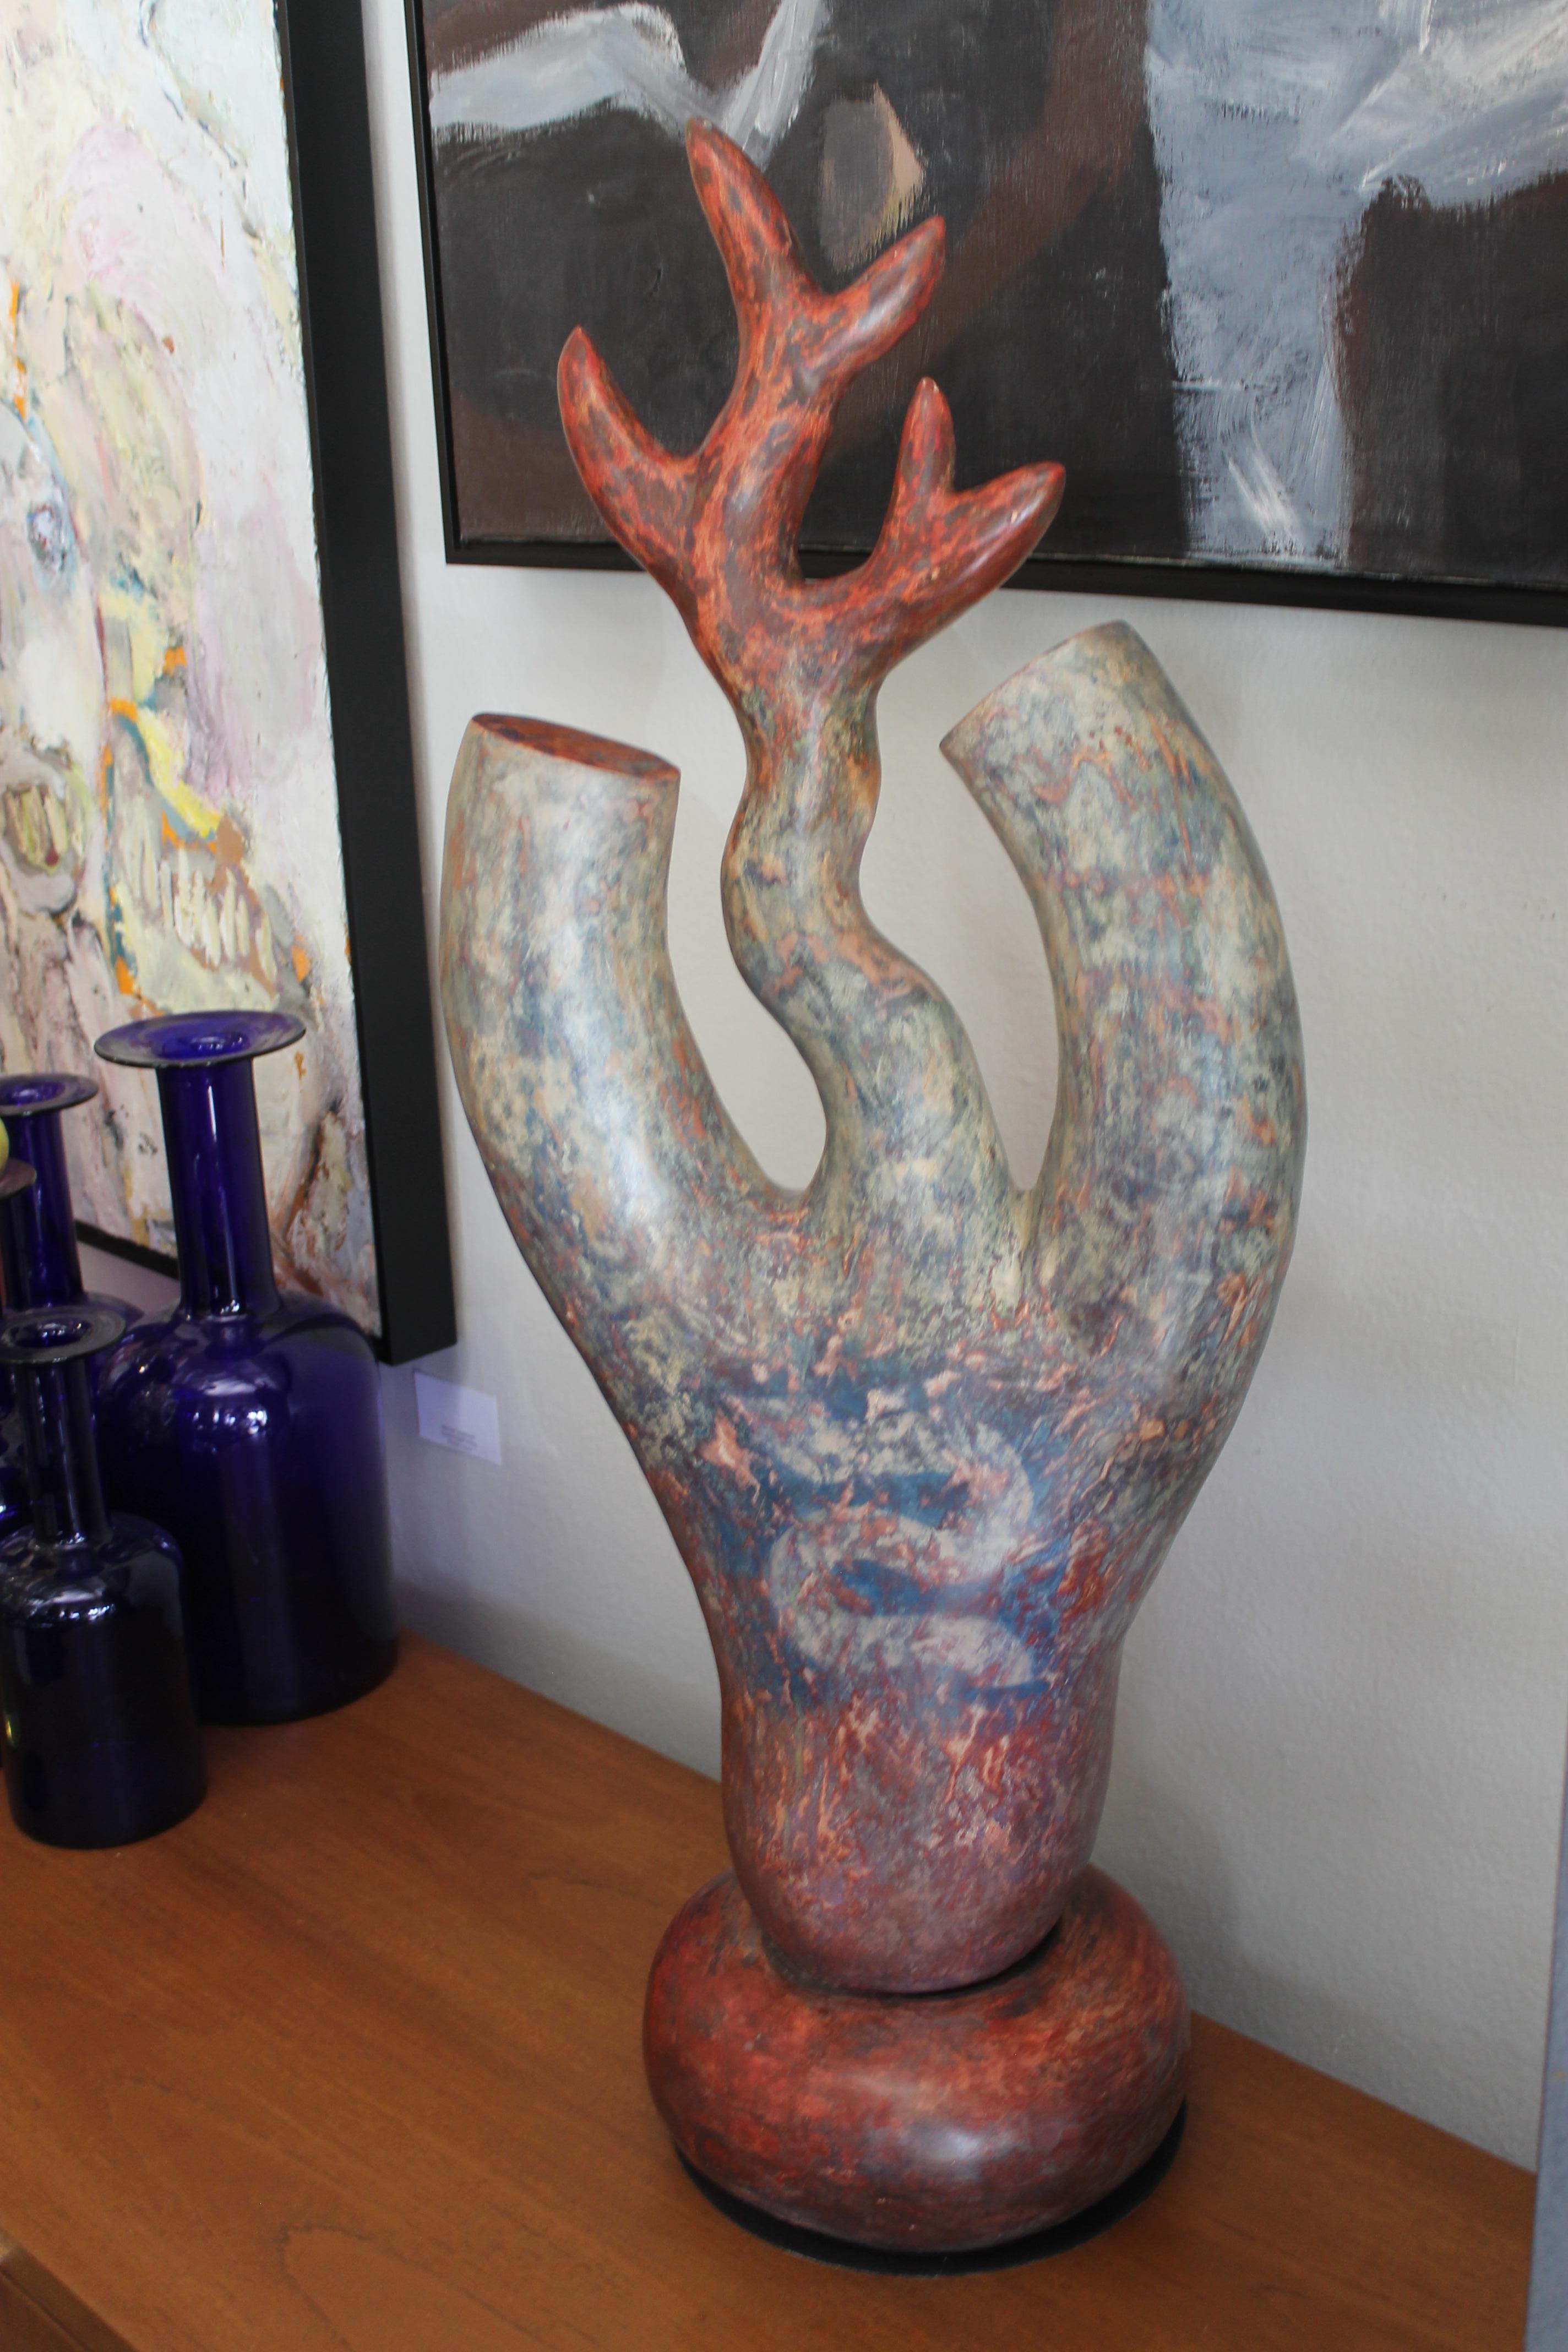 Ceramic sculpture with a snake motif by James Kouretas (1947-2016). Sculpture measures 14